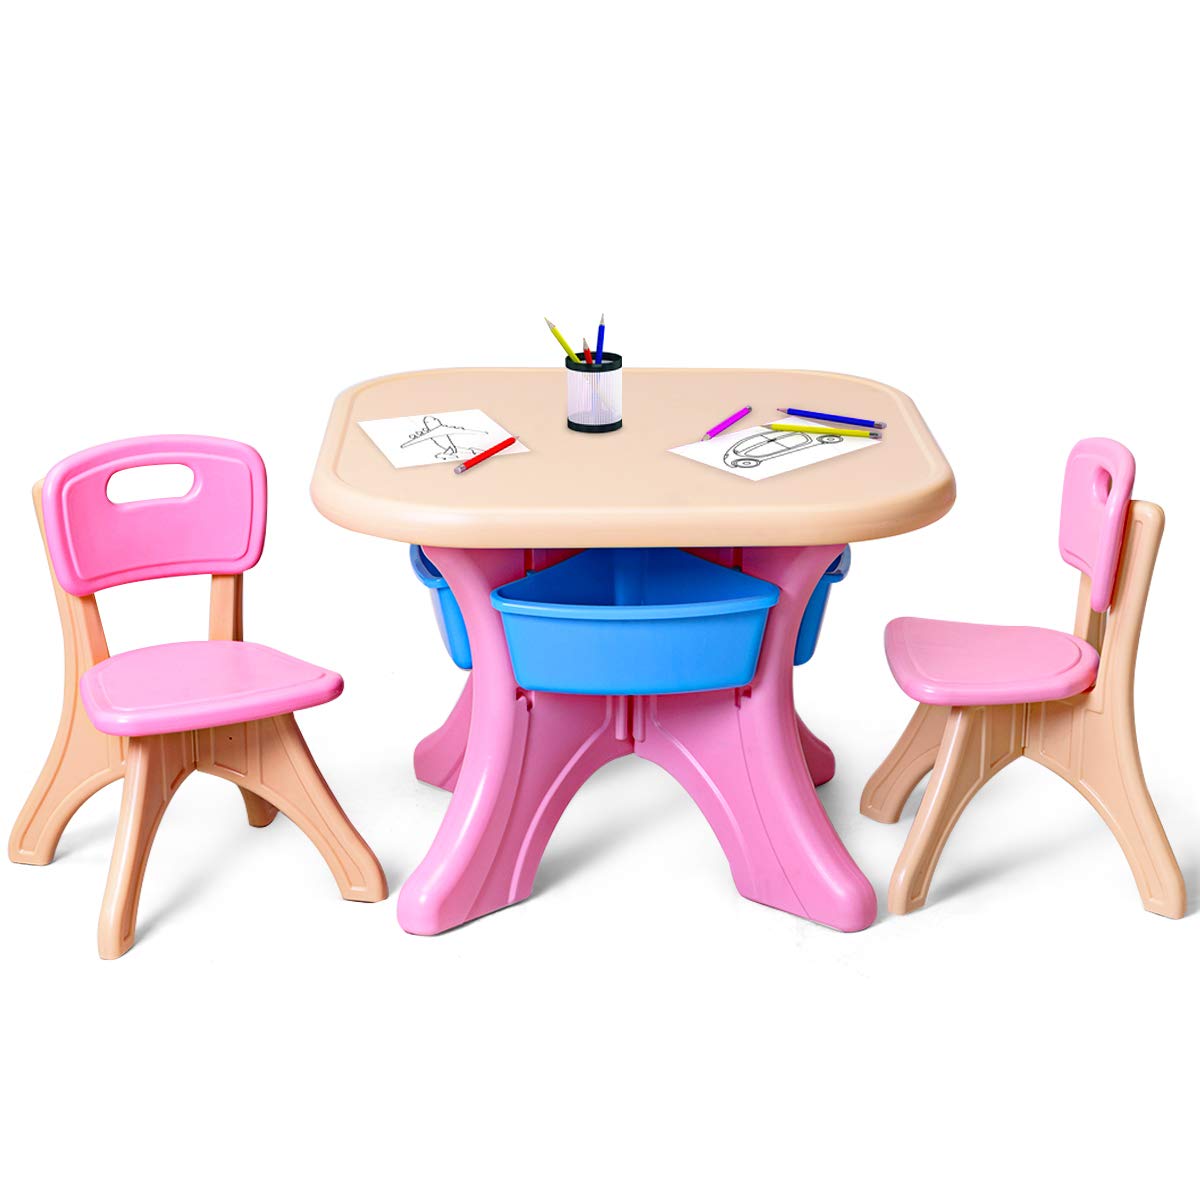 children's table with storage underneath